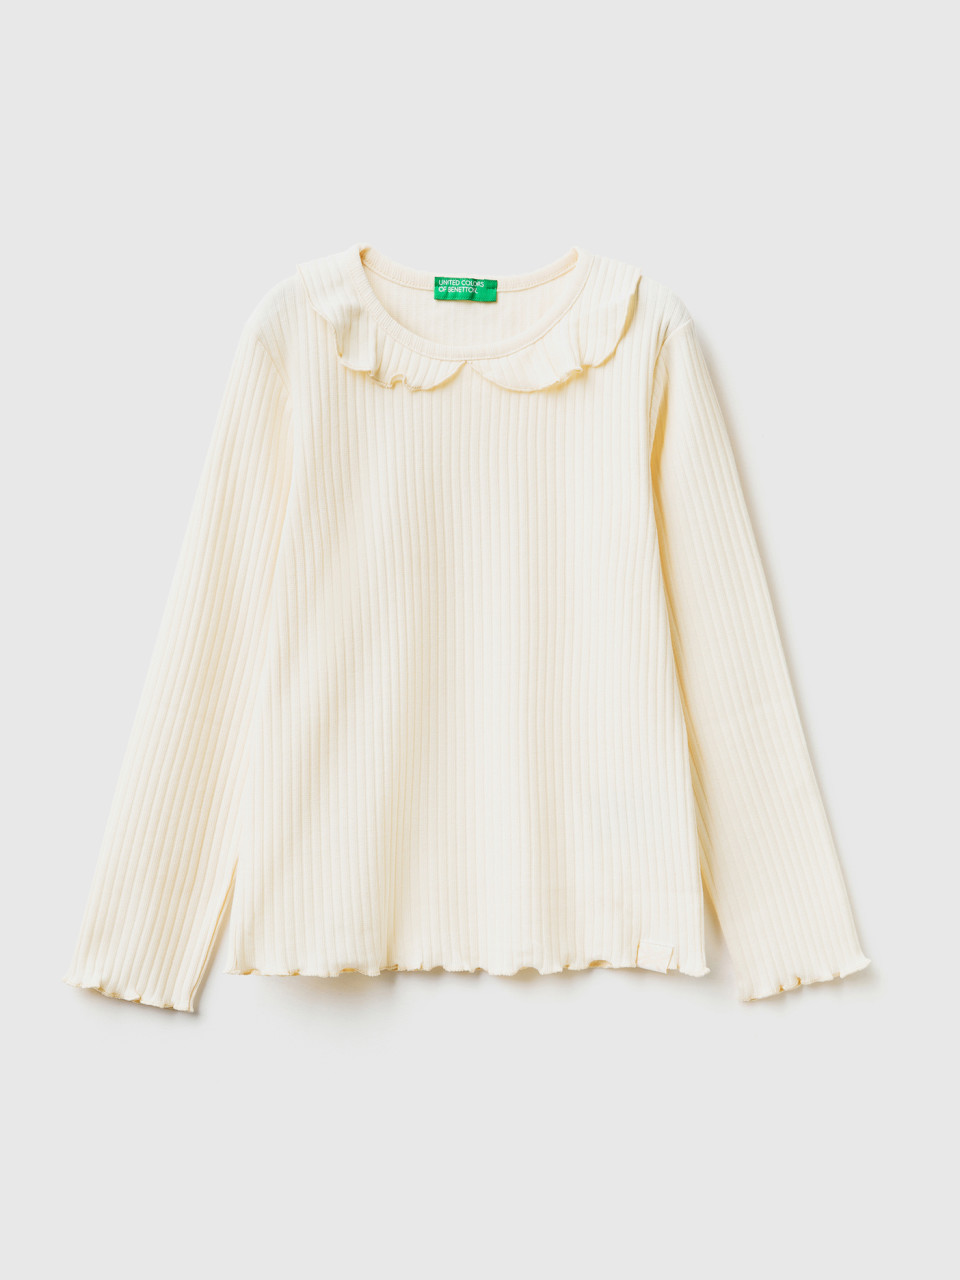 Benetton, Long Sleeve T-shirt With Collar, Creamy White, Kids